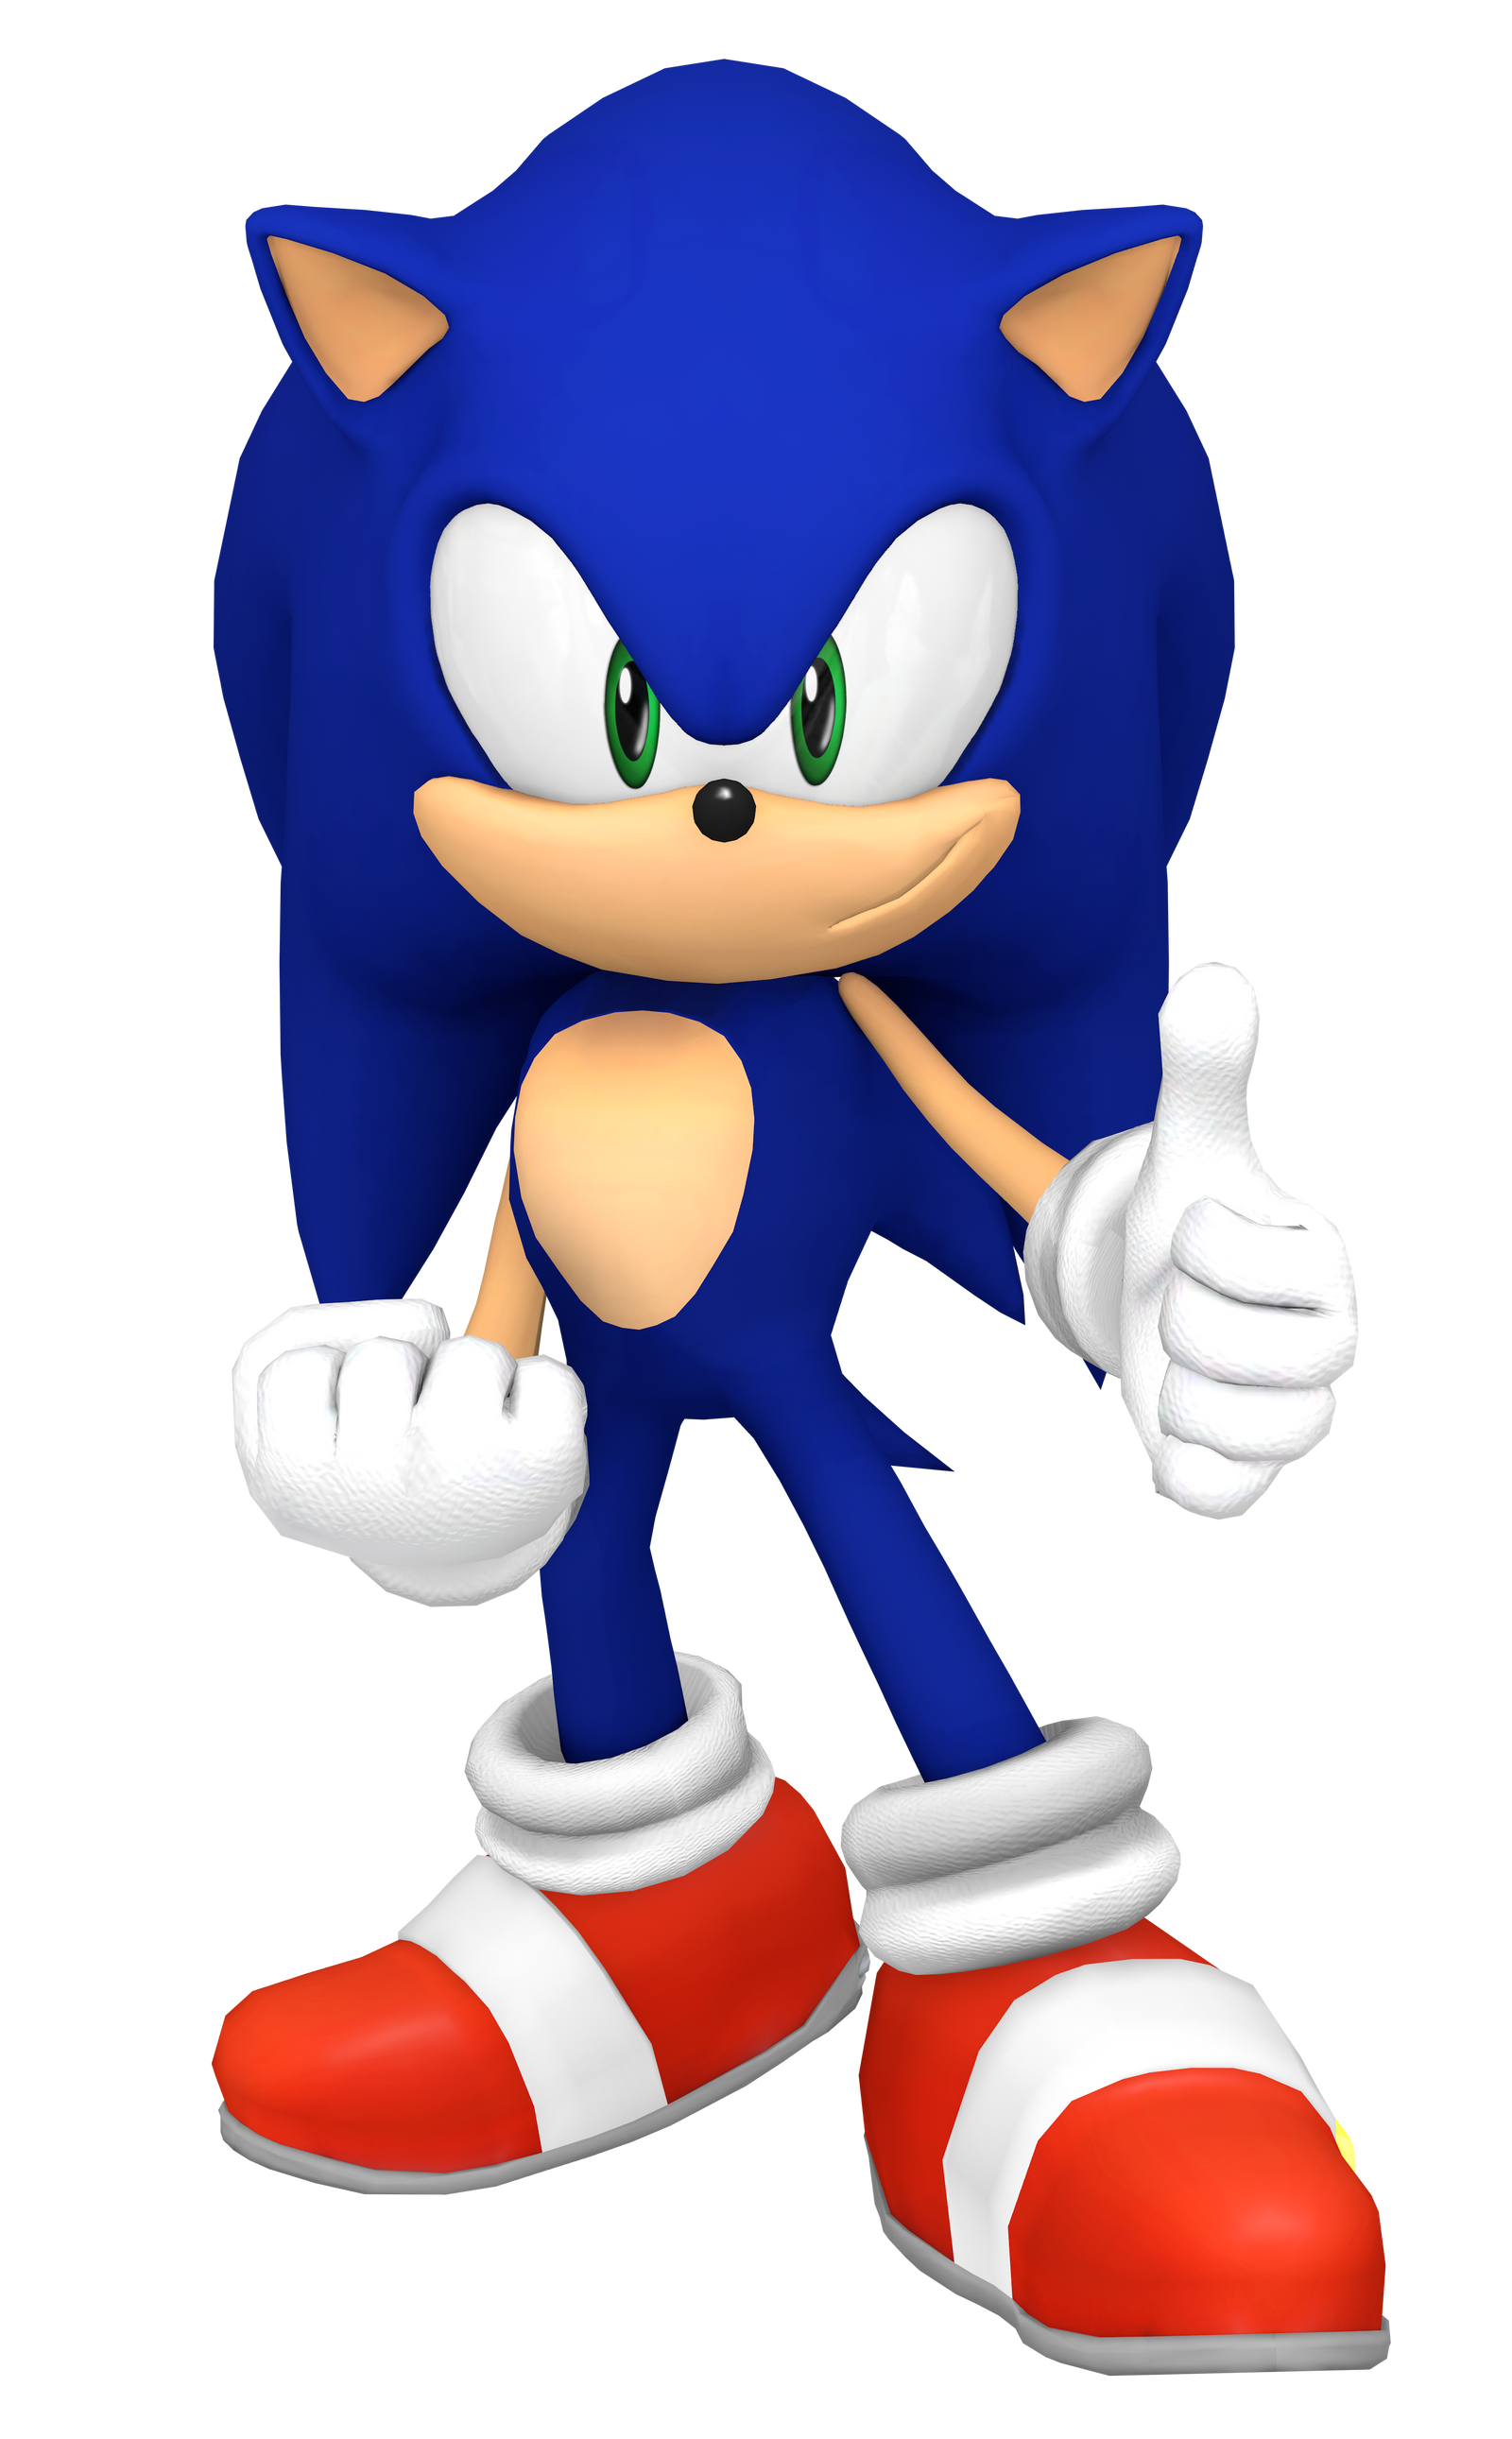 Dreamcast Sonic  Sonic Adventure 2 Main Render by bandicootbrawl96 on  DeviantArt